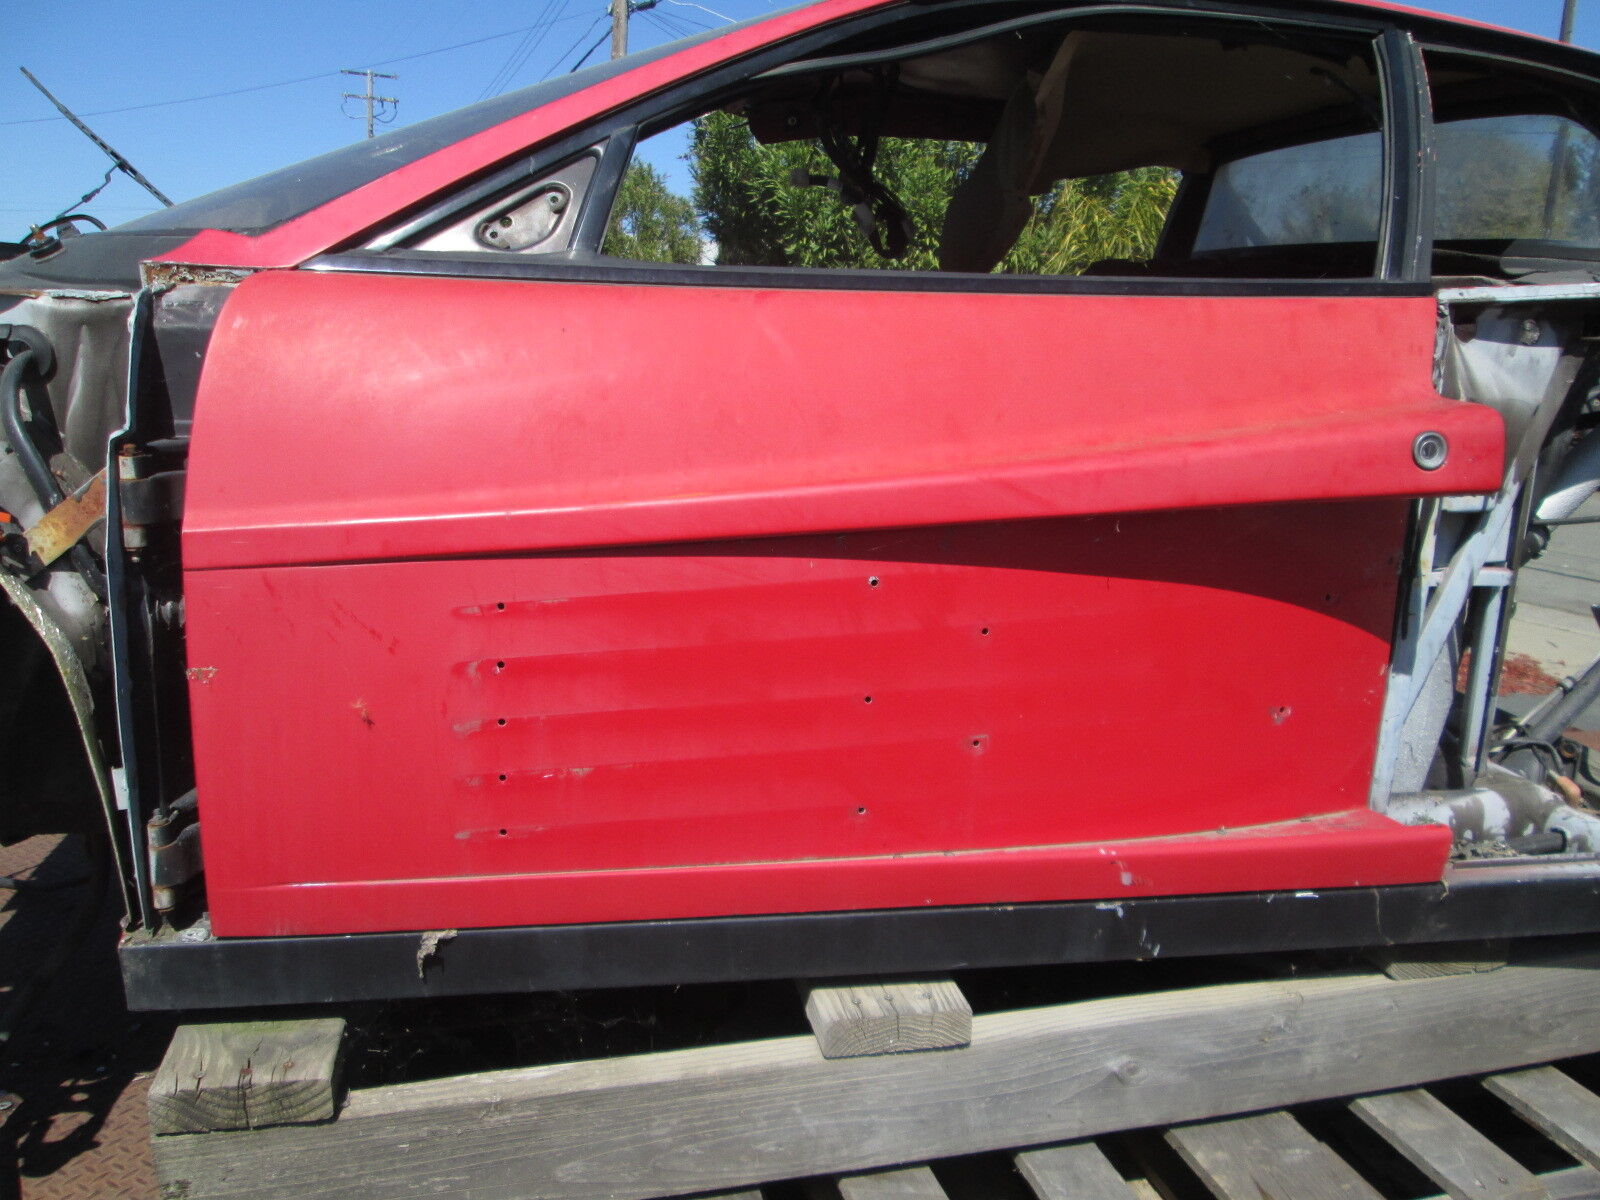 Ferrari Testarossa LH Door Shell - Skin # 61540500